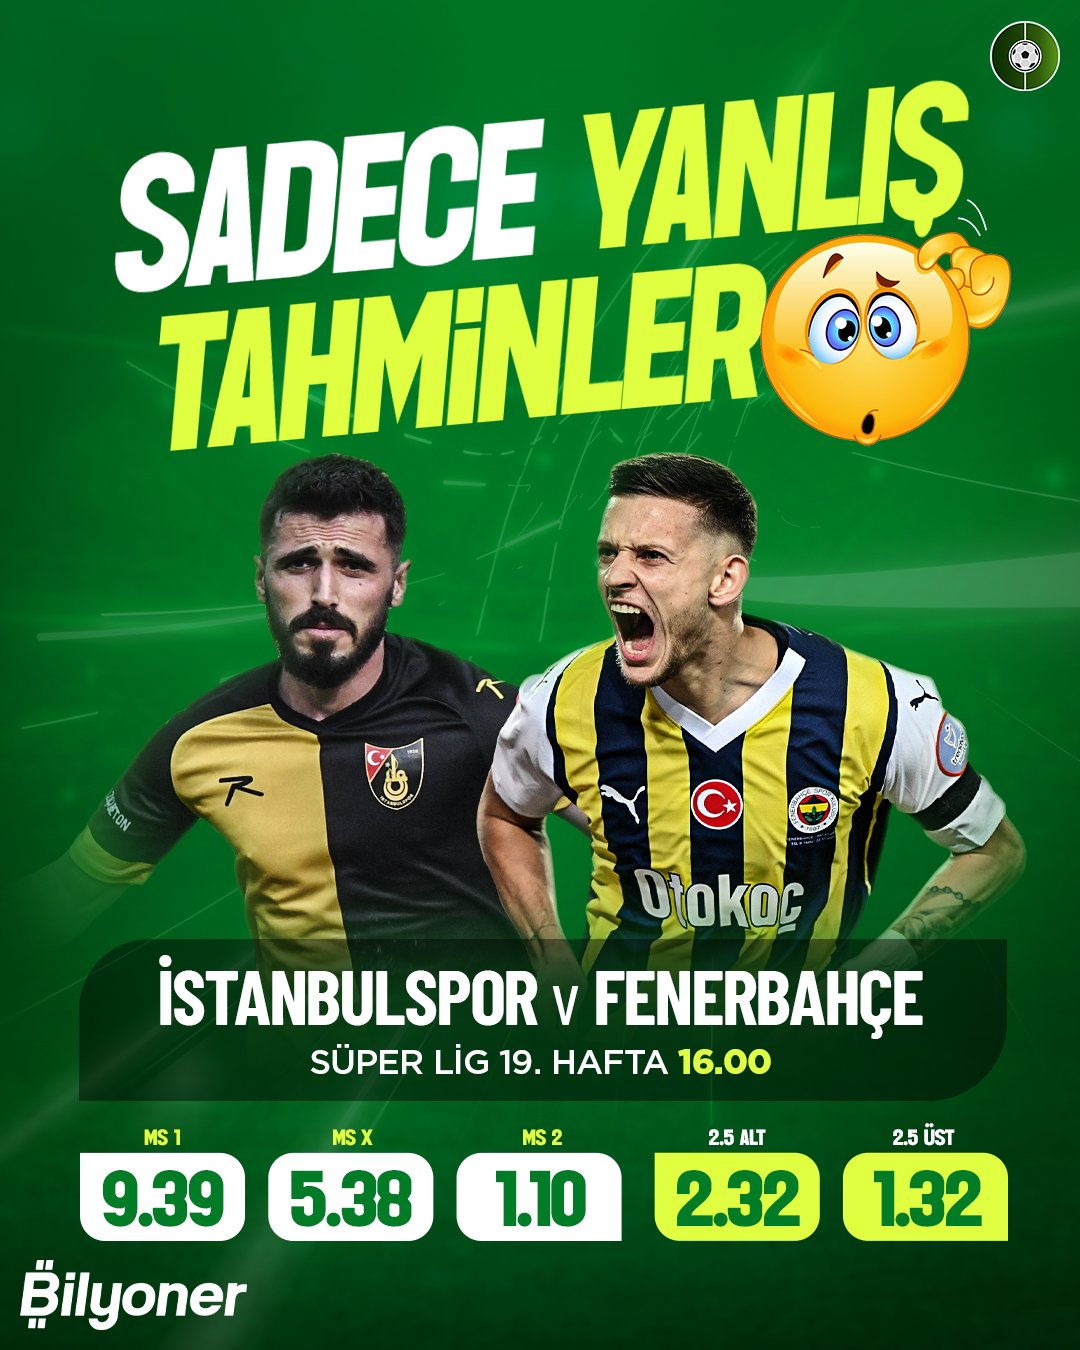 The Fenerbahçe vs Galatasaray Rivalry: A Battle of Turkish Football Giants